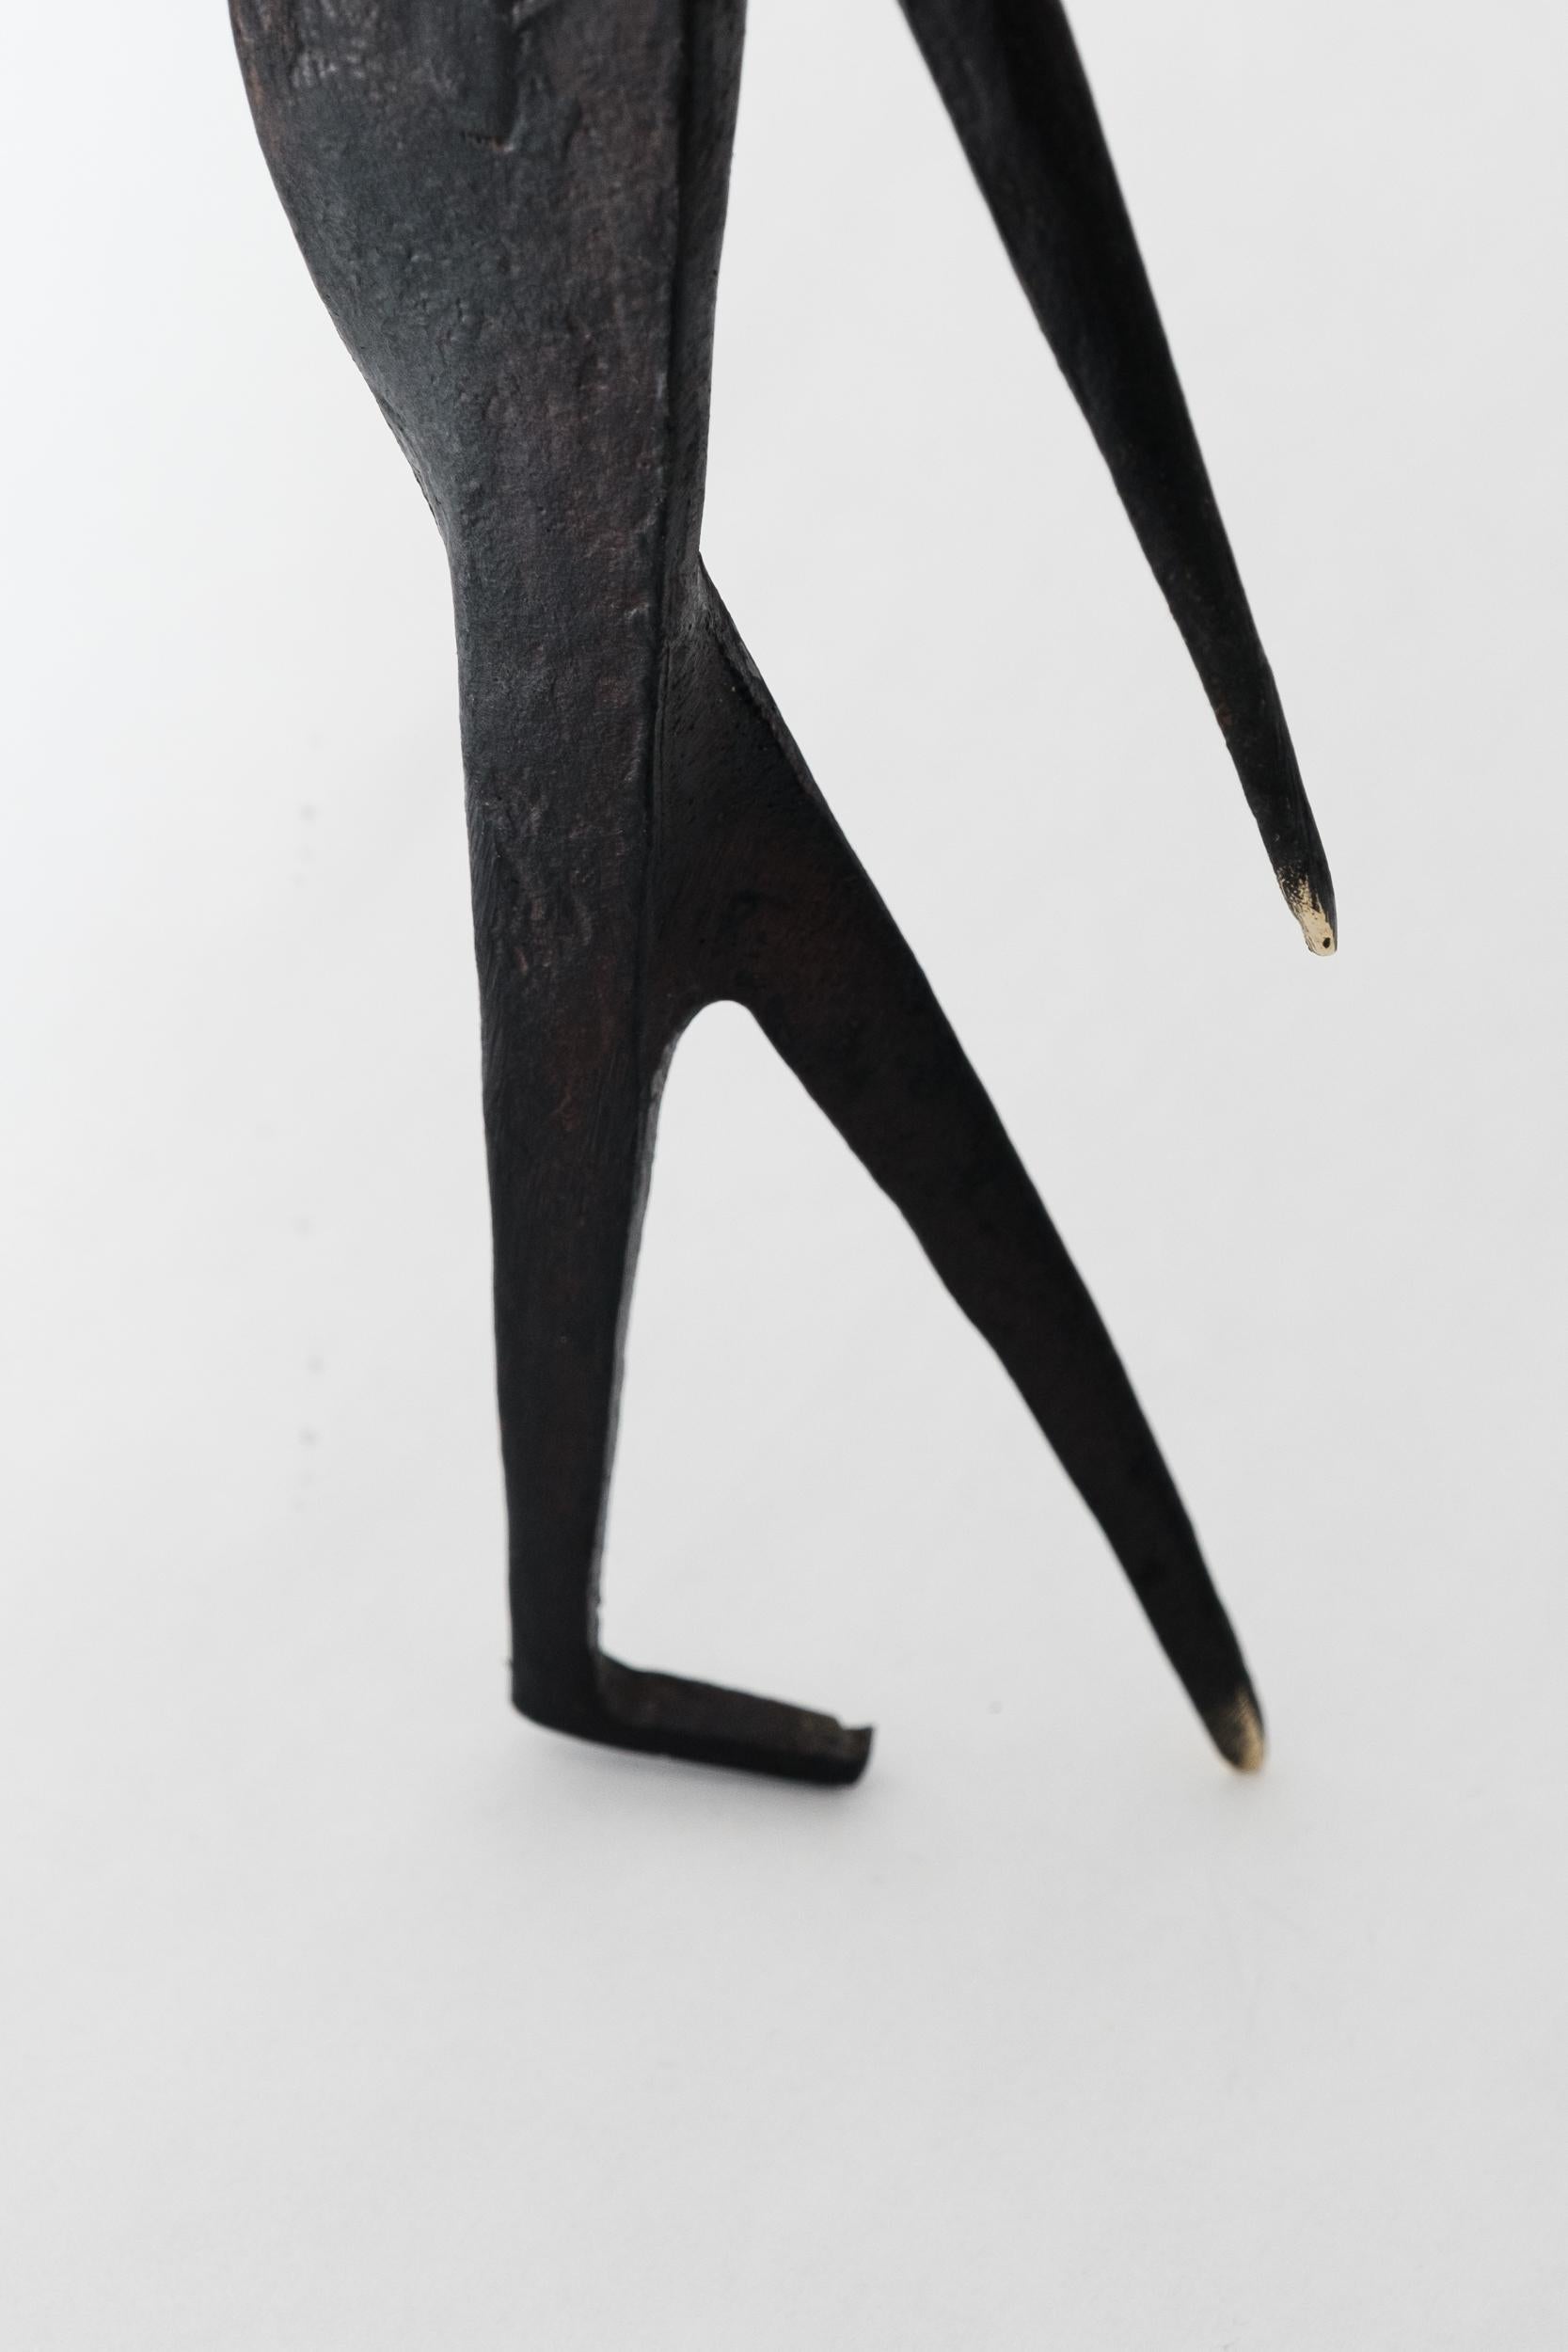 Carl Auböck Model #4060 'Man with Stick' Brass Sculpture For Sale 13